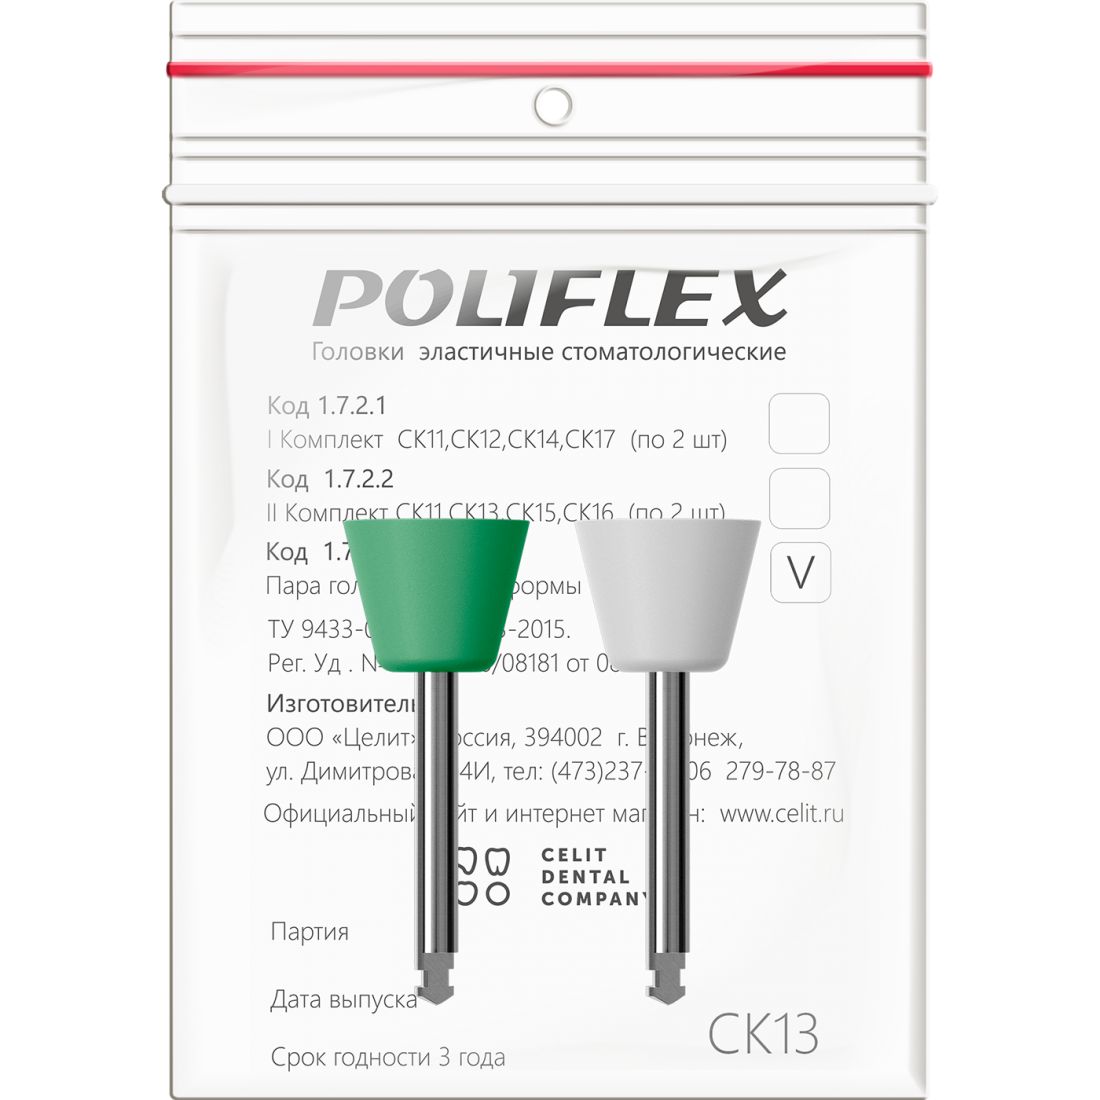 Poliflex СК13 - головки Полифлекс для обработки пломб (2шт)